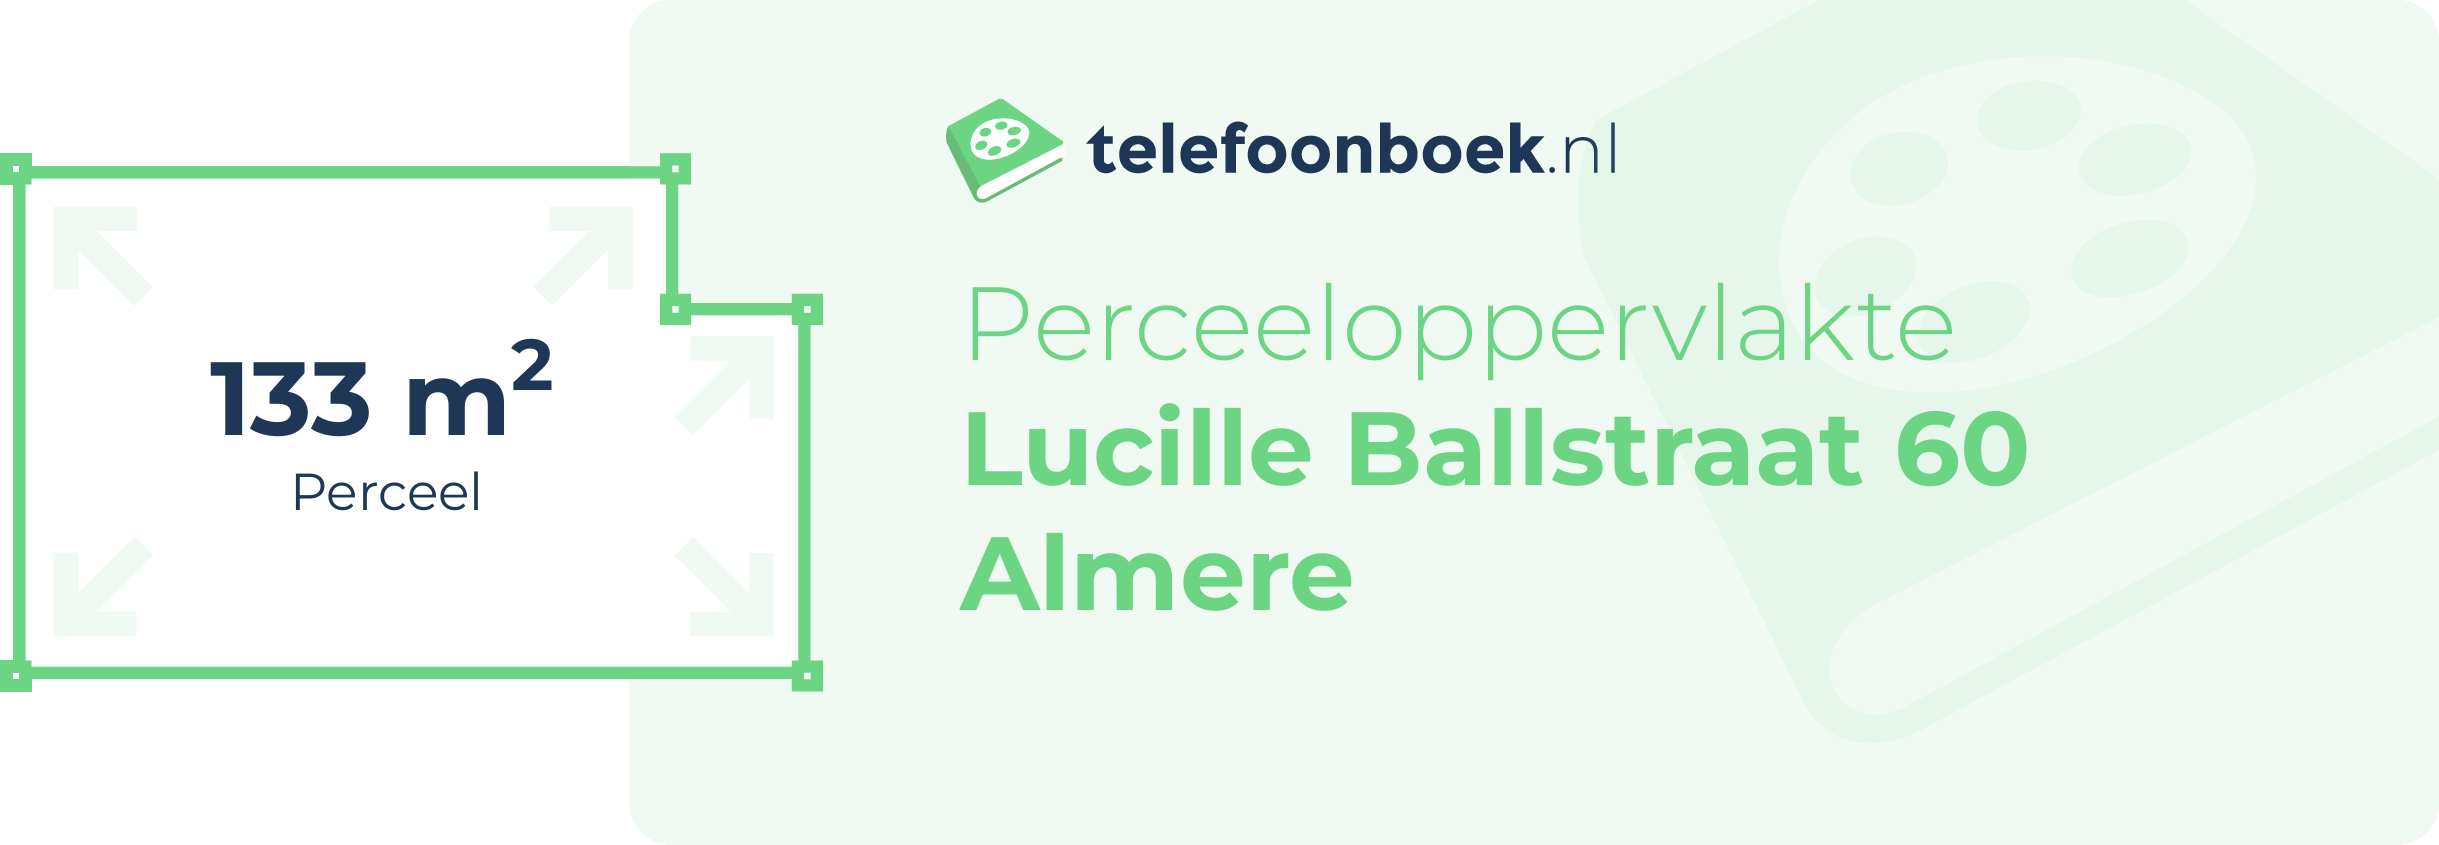 Perceeloppervlakte Lucille Ballstraat 60 Almere